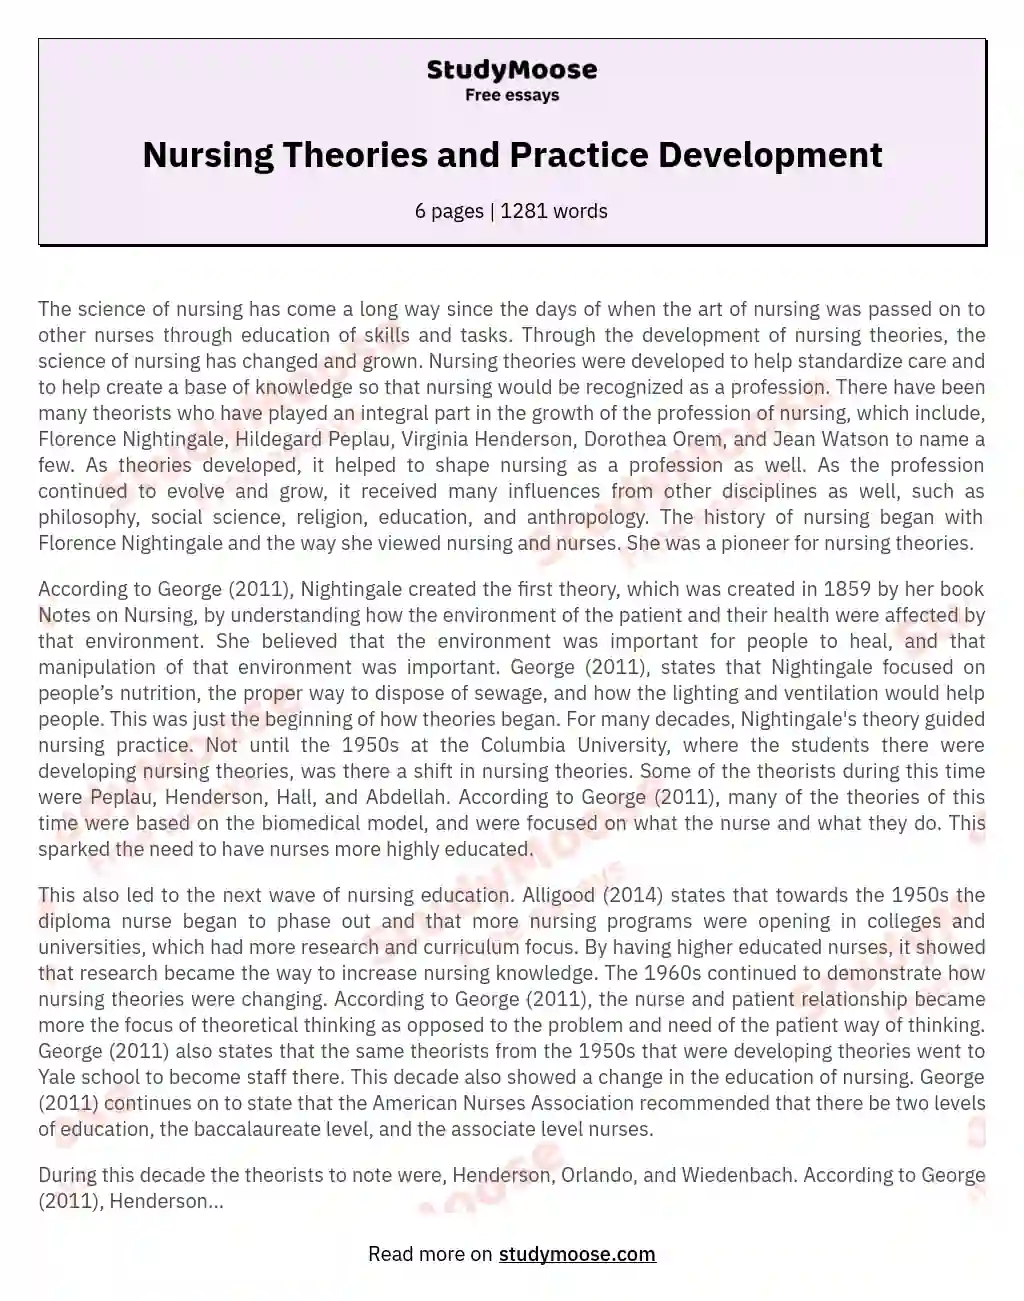 Nursing Theories and Practice Development